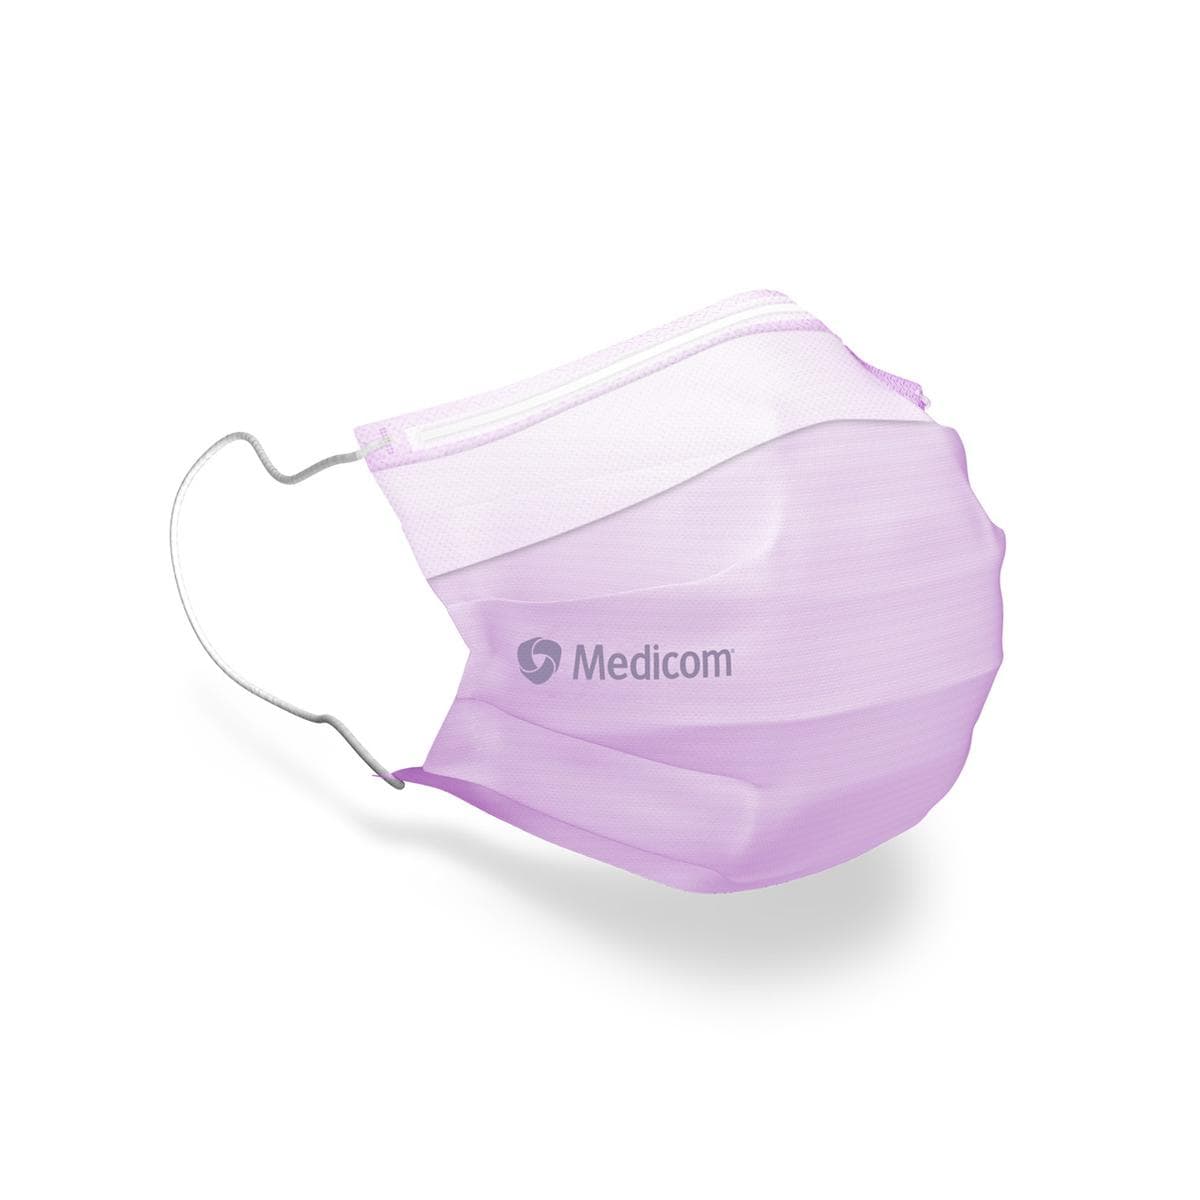 Mondmasker SafeMask SofSkin fog-free earloop Type IIR - Lavendel - 50 stuks